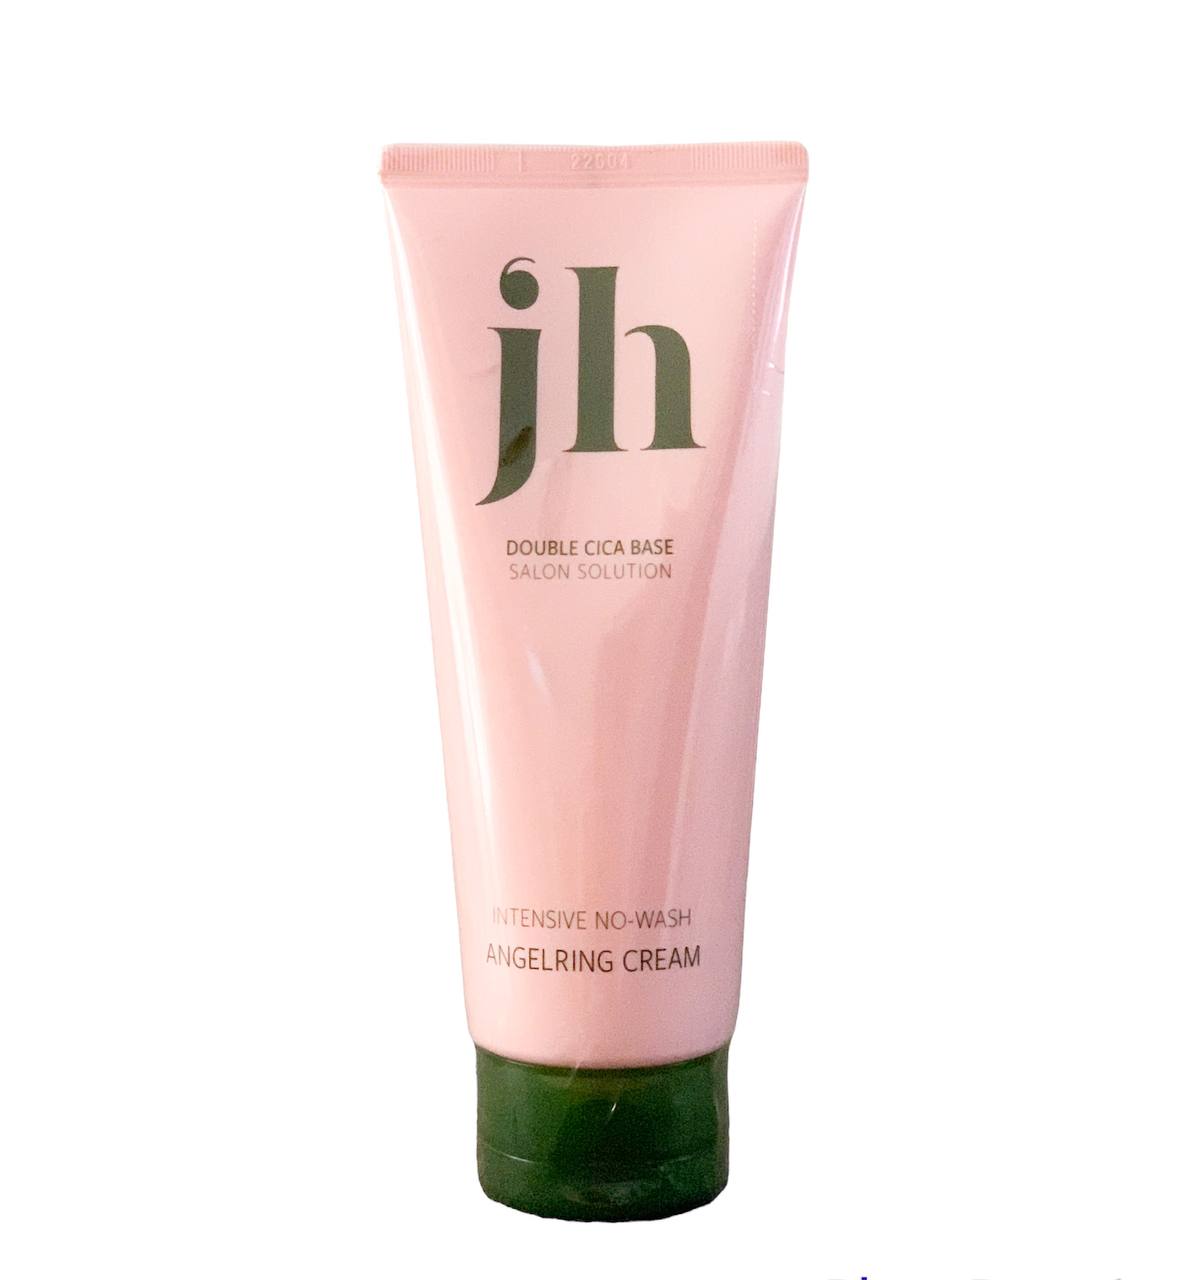 Несмываемый крем для волос Jennyhouse Intensive no wash Angeling Cream, 150 мл